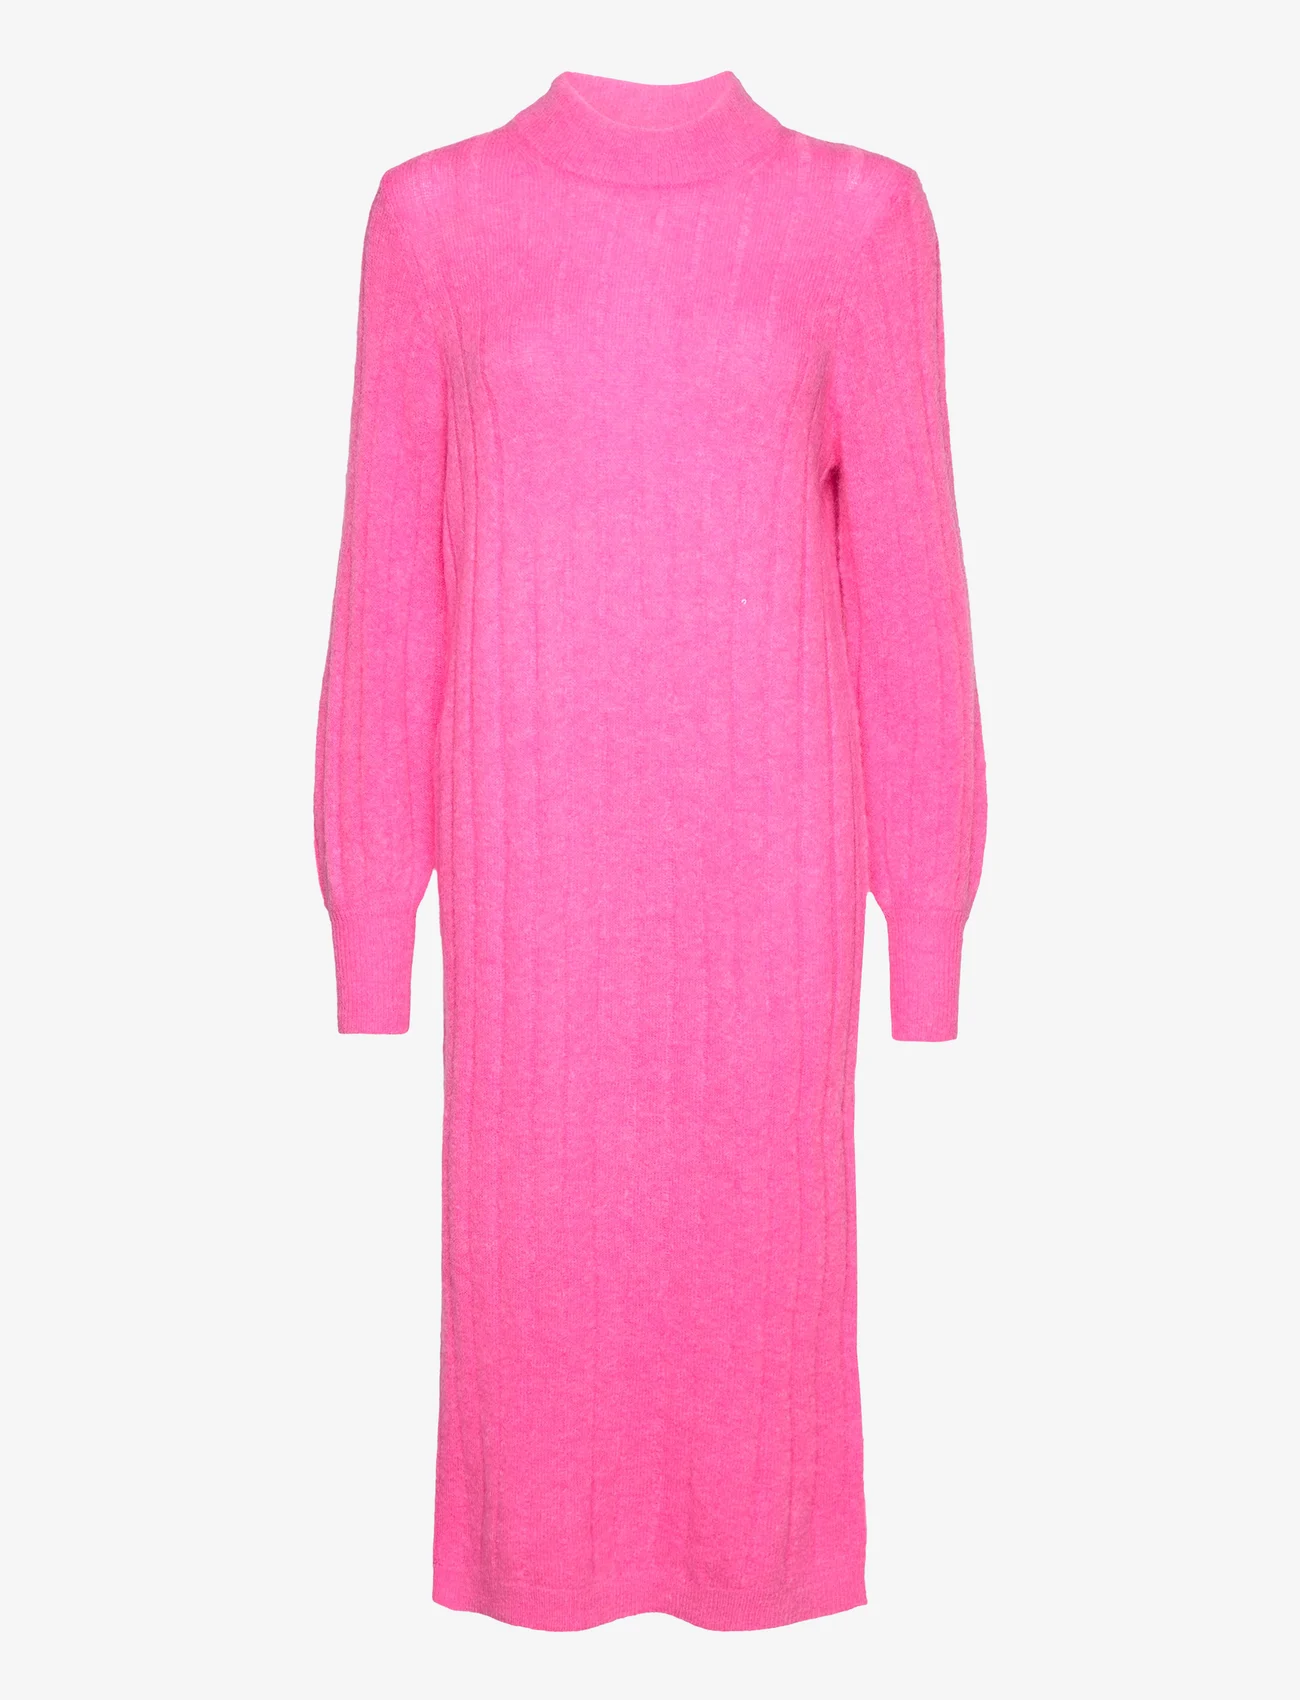 Selected Femme - SLFGLOWIE LS KNIT O-NECK DRESS B - strickkleider - phlox pink - 0